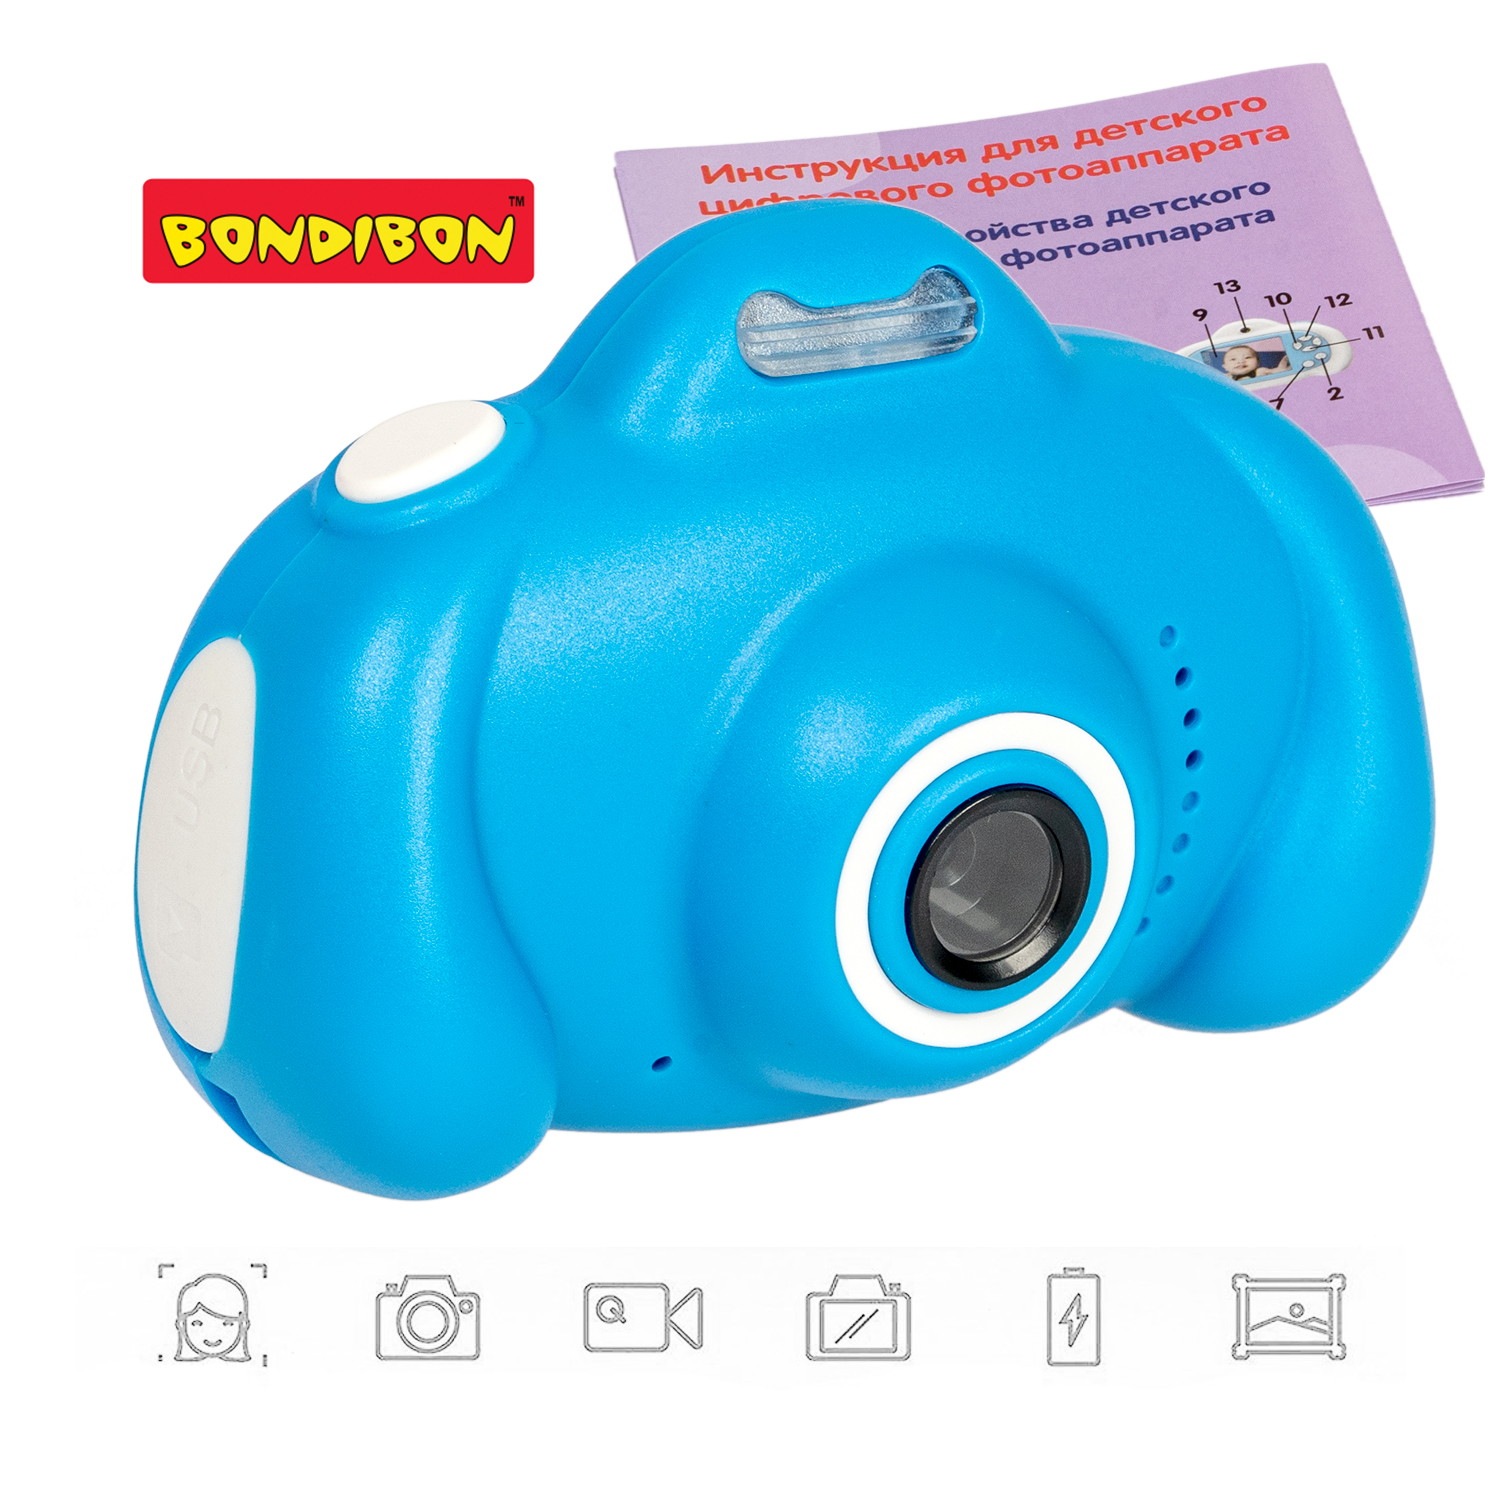 Цифровой фотоаппарат BONDIBON с селфи камерой и видео съемкой голубого цвета - фото 11